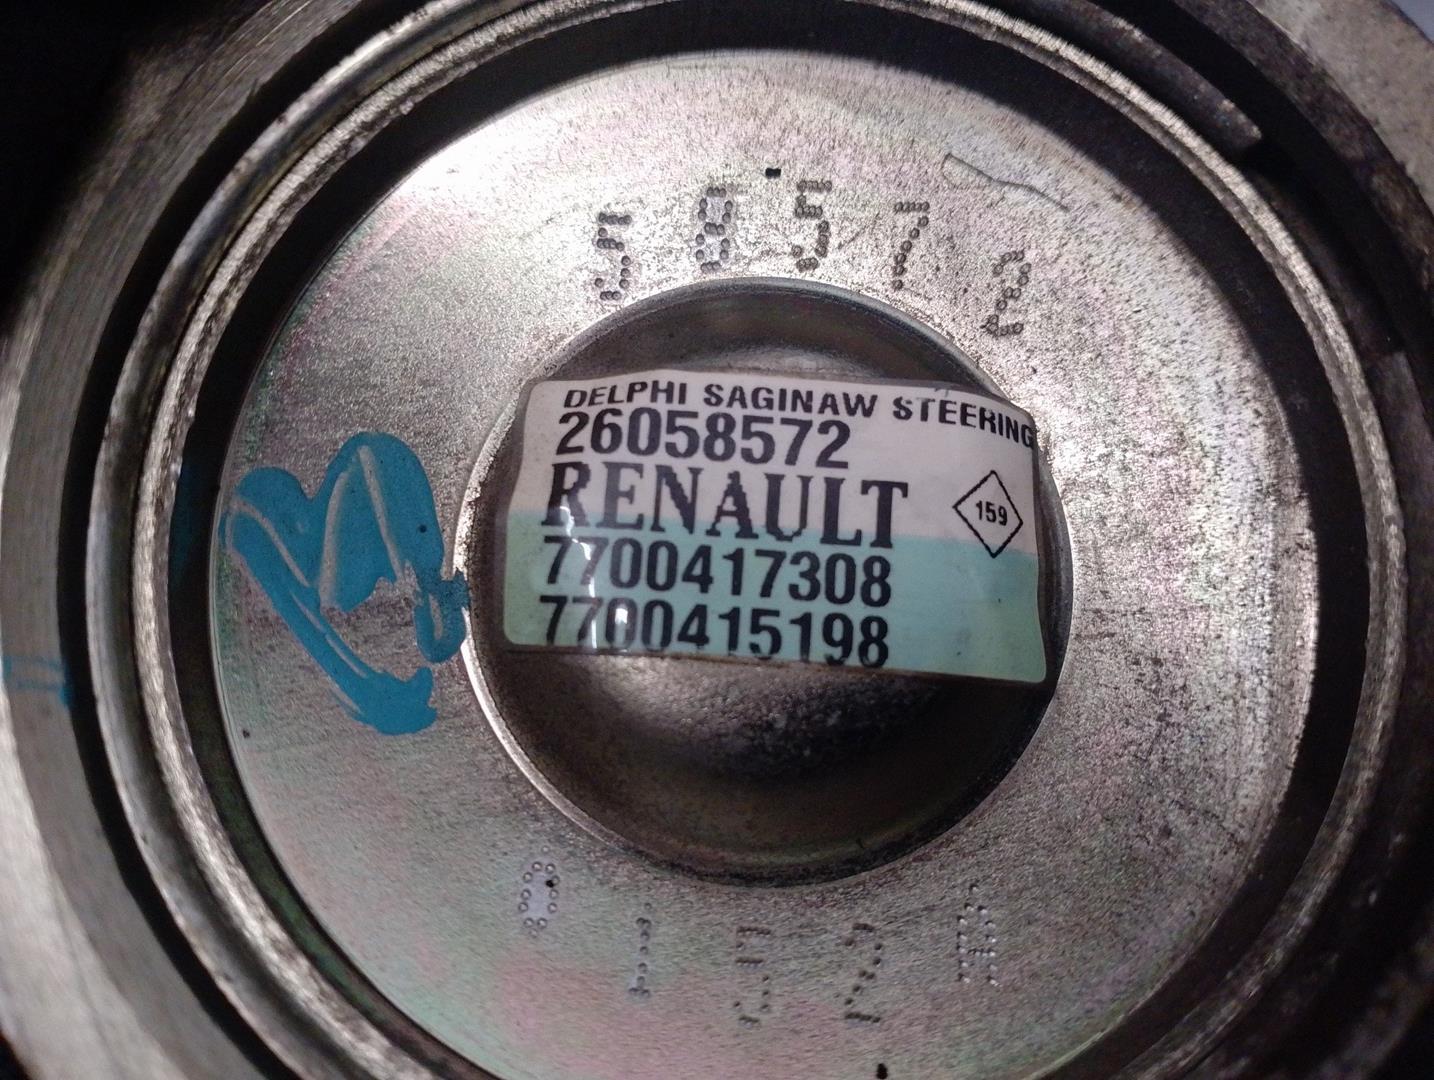 RENAULT Megane 1 generation (1995-2003) Power Steering Pump 7700417308, 26058572, DELPHI 24147207